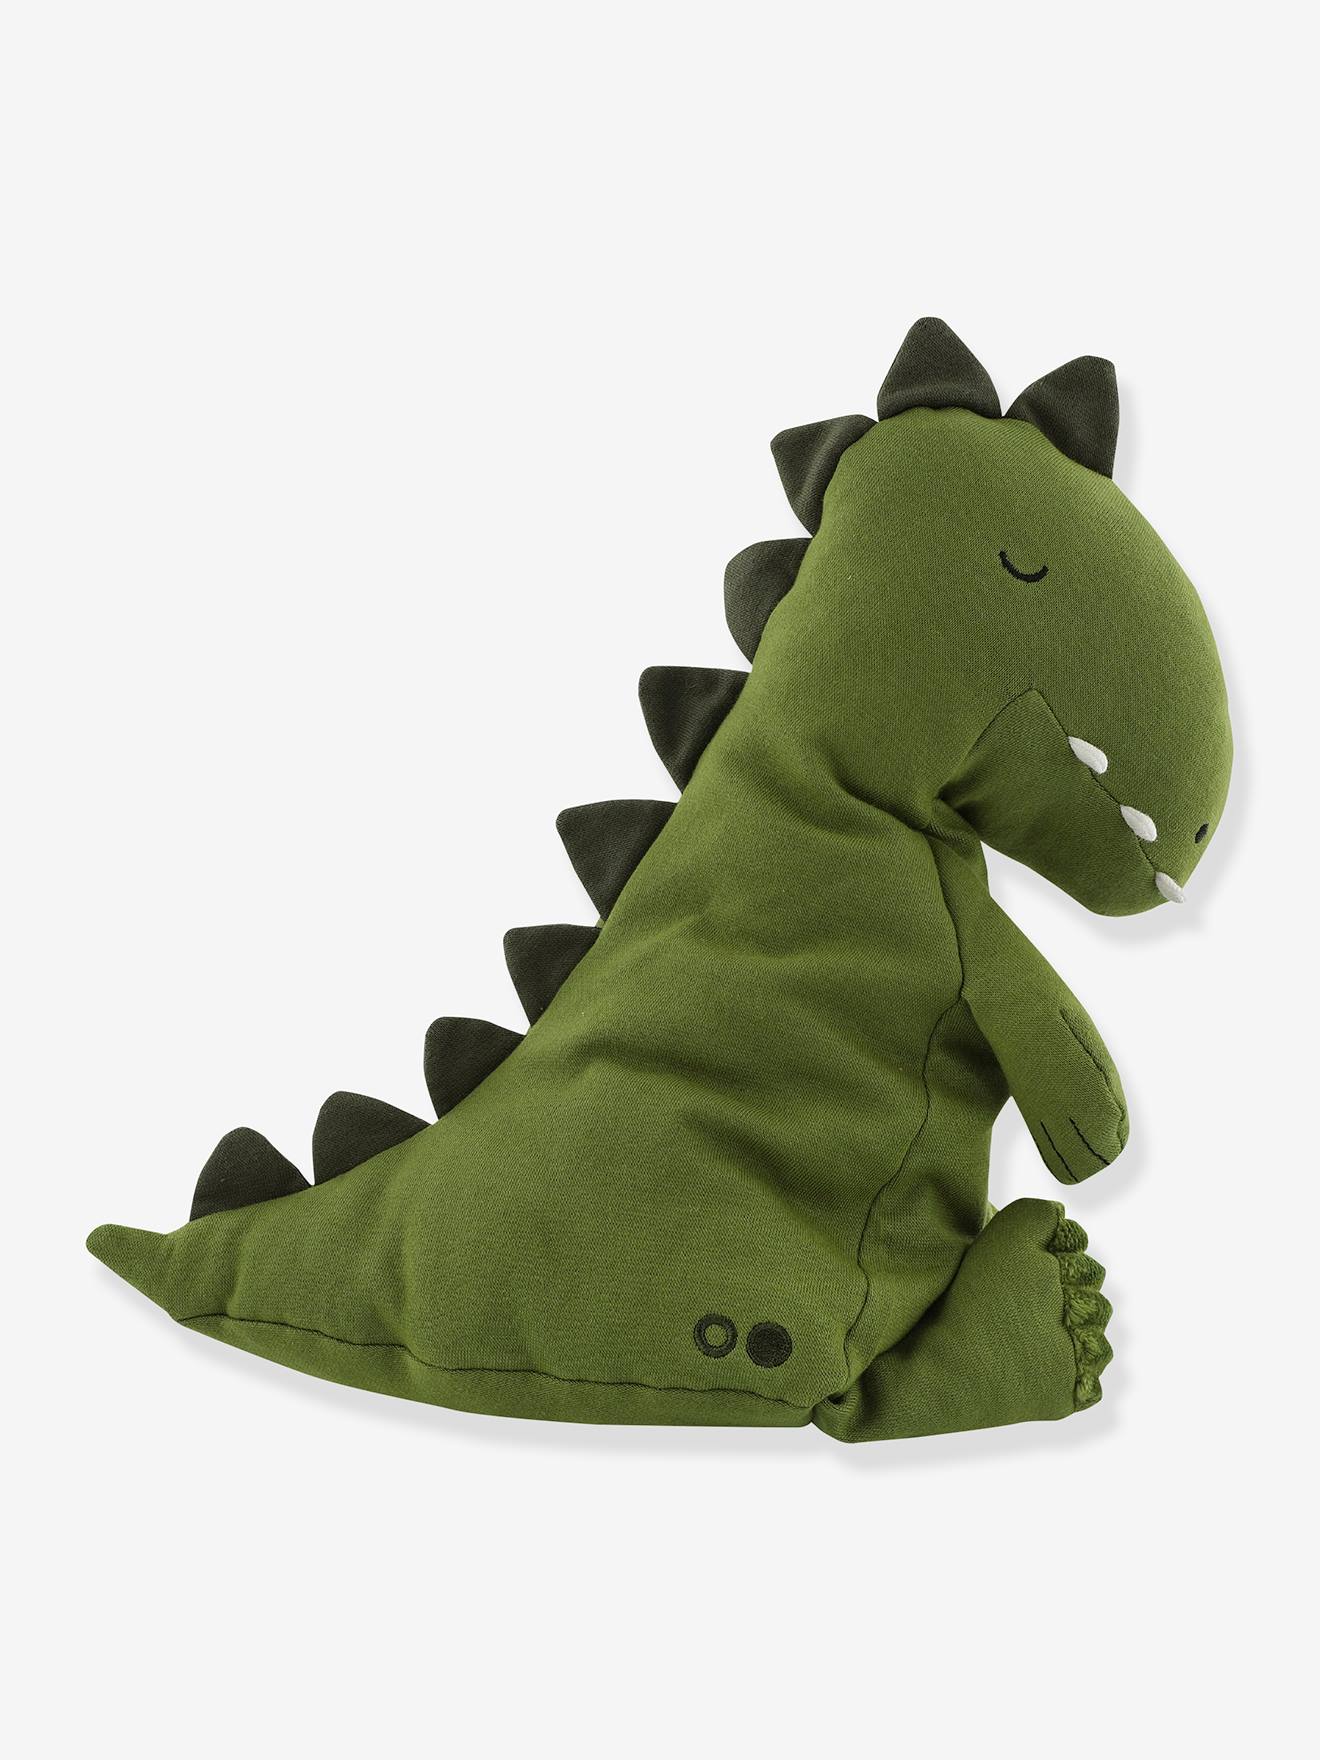 Trixie Plush Toy Knuffel Large 38cm | Mr. Dino